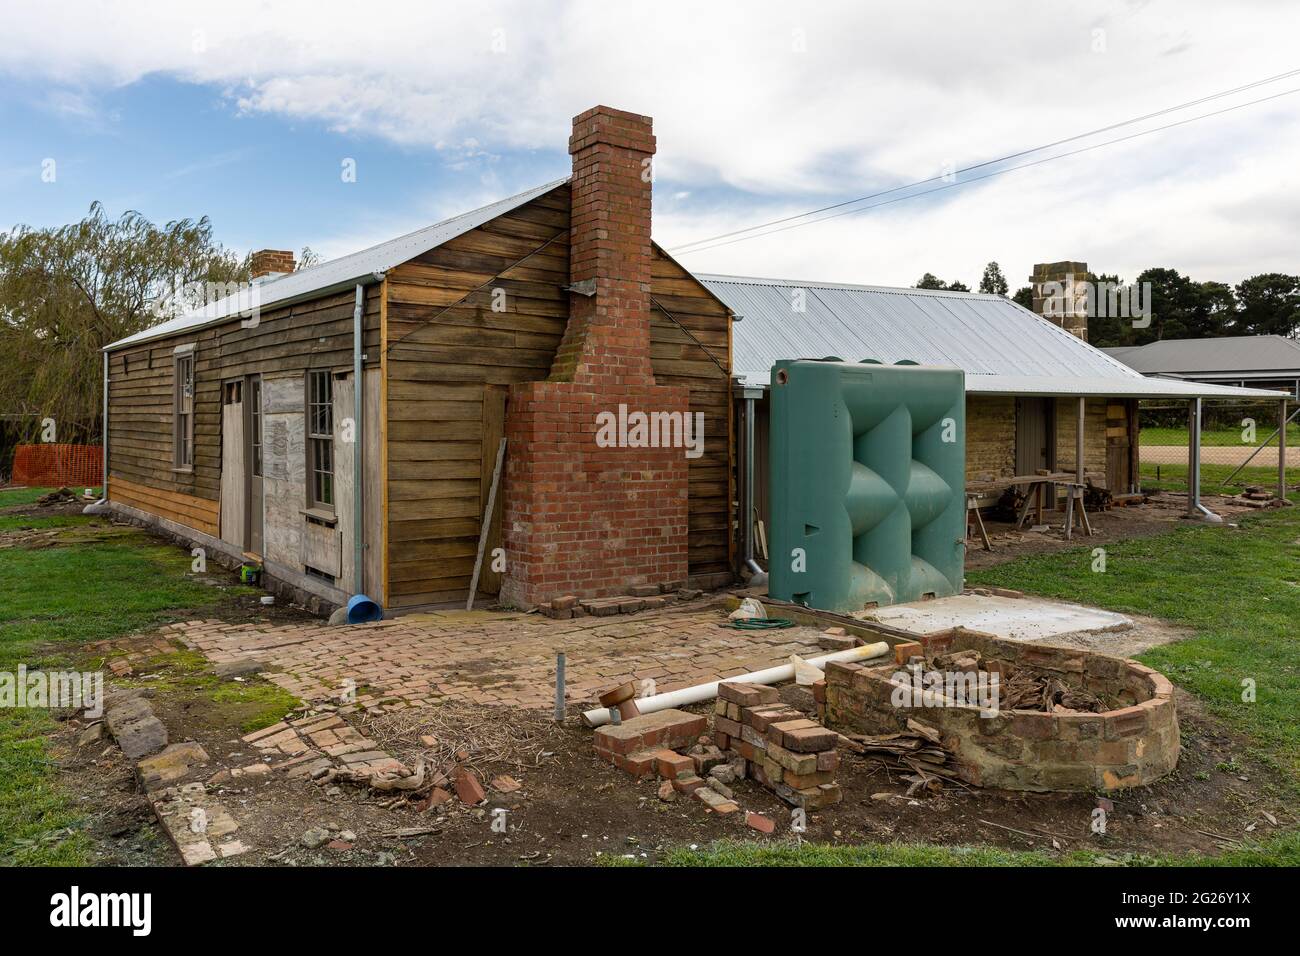 La casa d'infanzia di Bushranger Ned Kelly, Beveridge, Victoria, Australia. Foto Stock